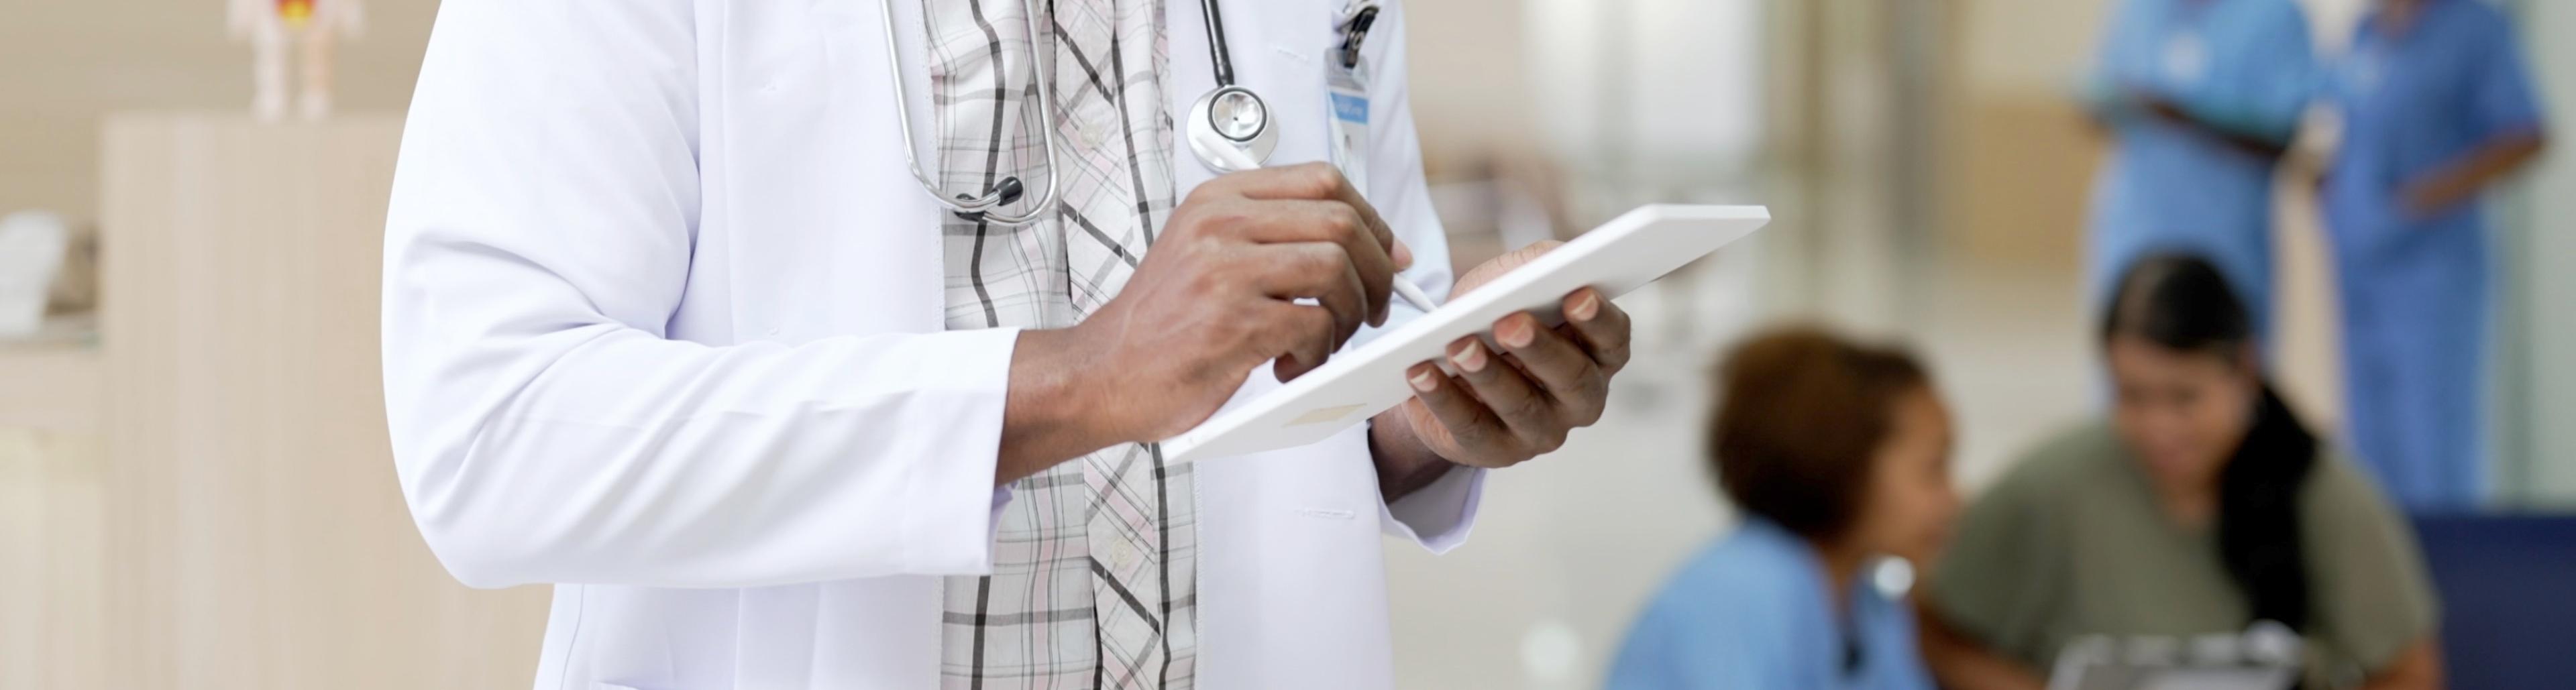 Black doctor making notes on tablet in hospital